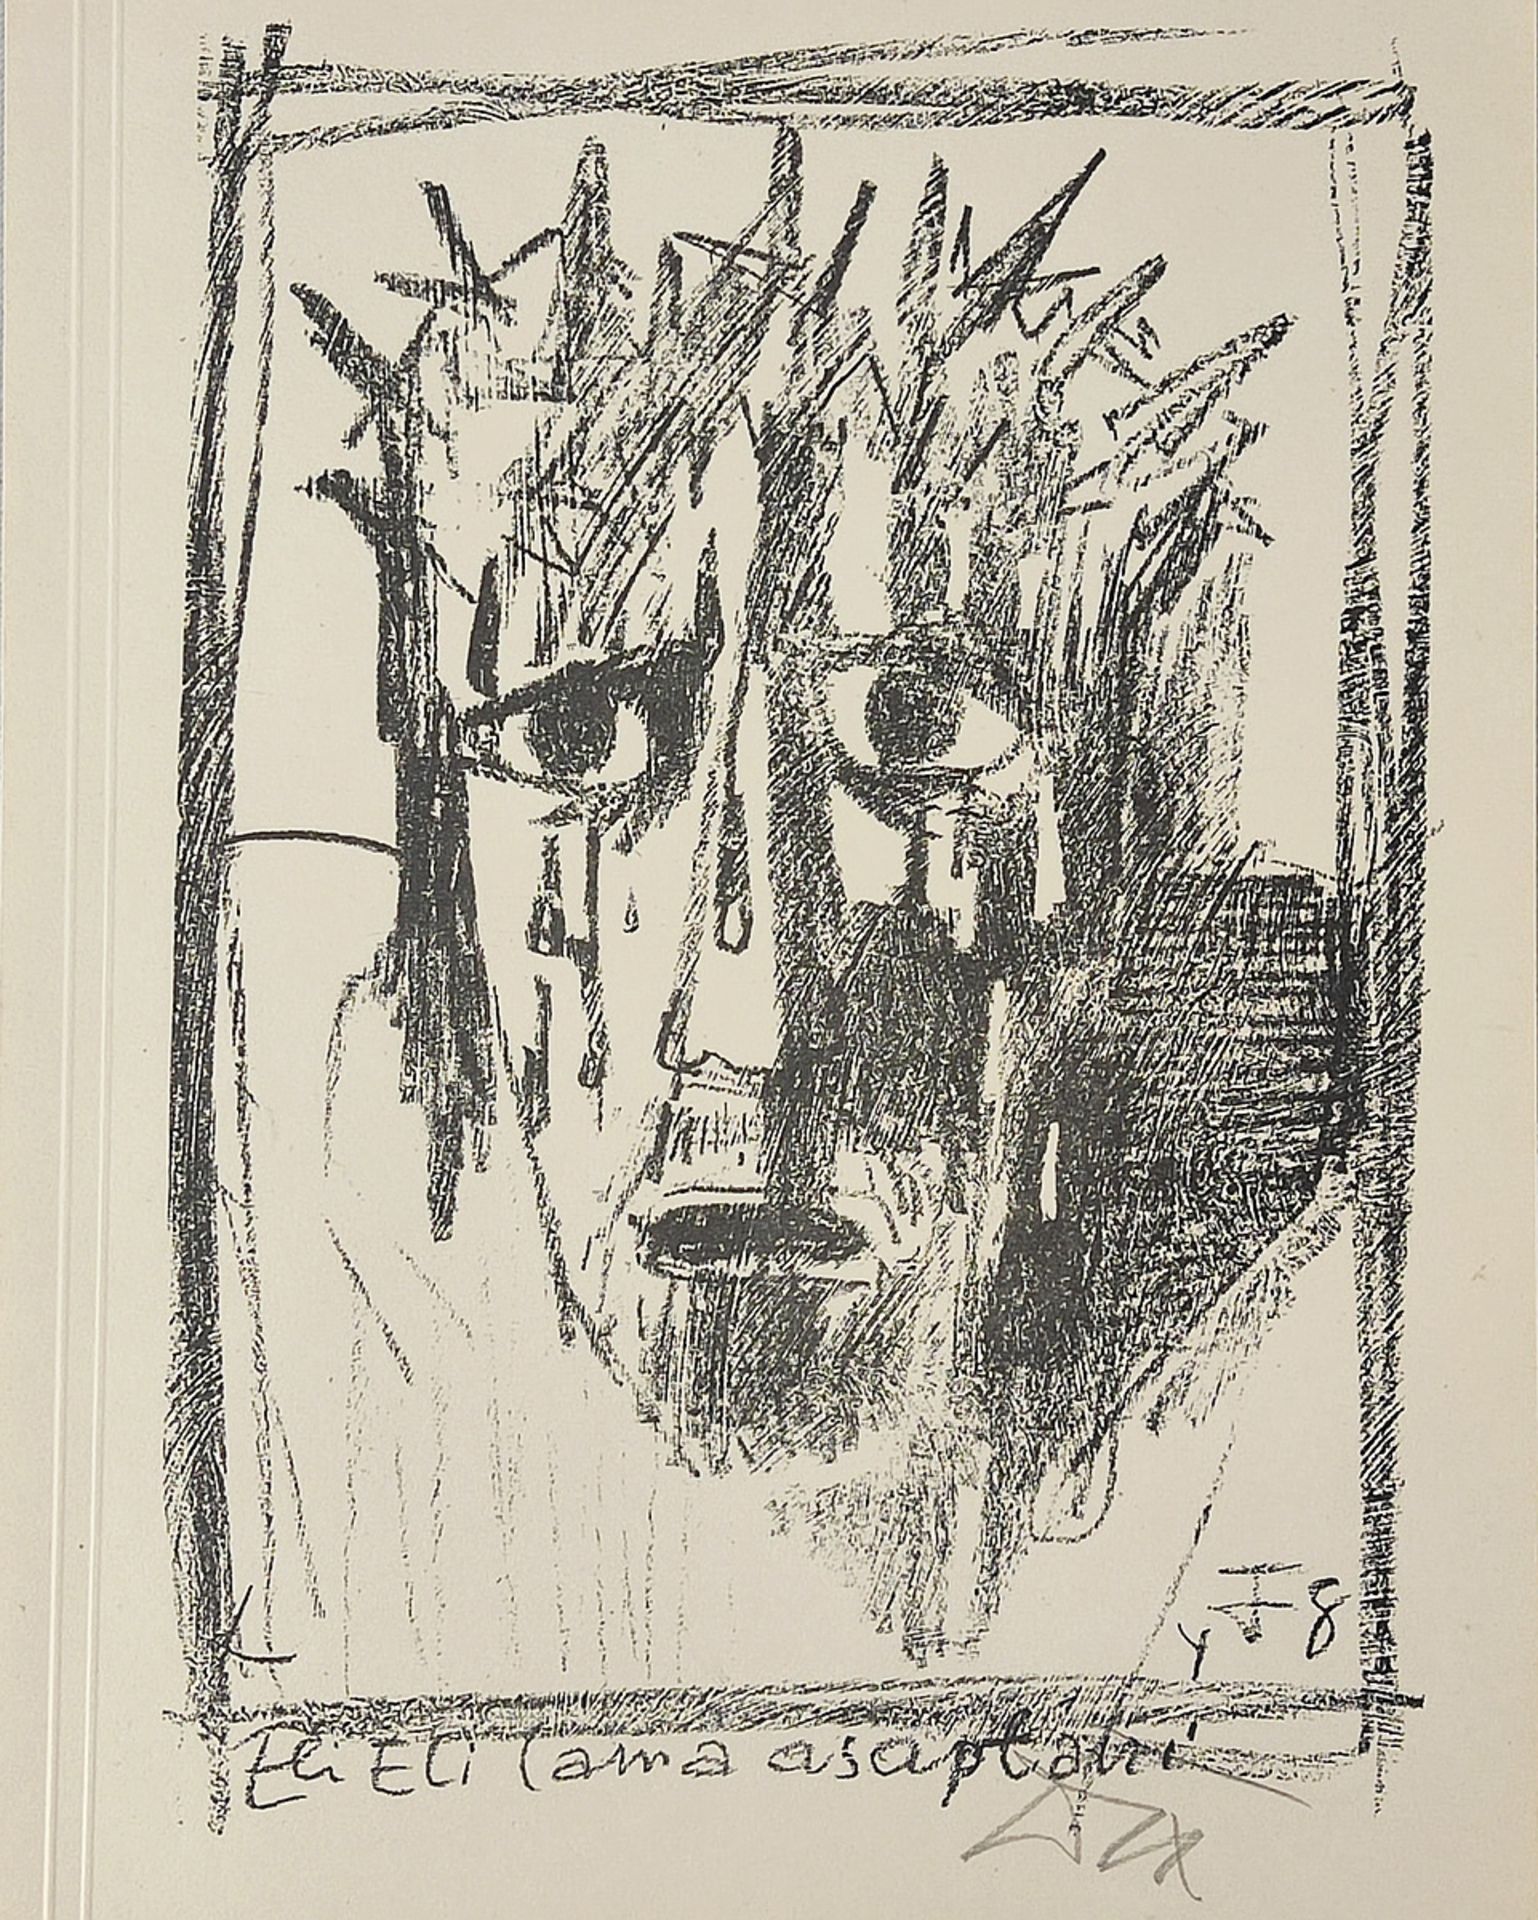 Otto Dix (1891-1969) "Eli, Eli, lama asabtani? 1948" Christuskopf